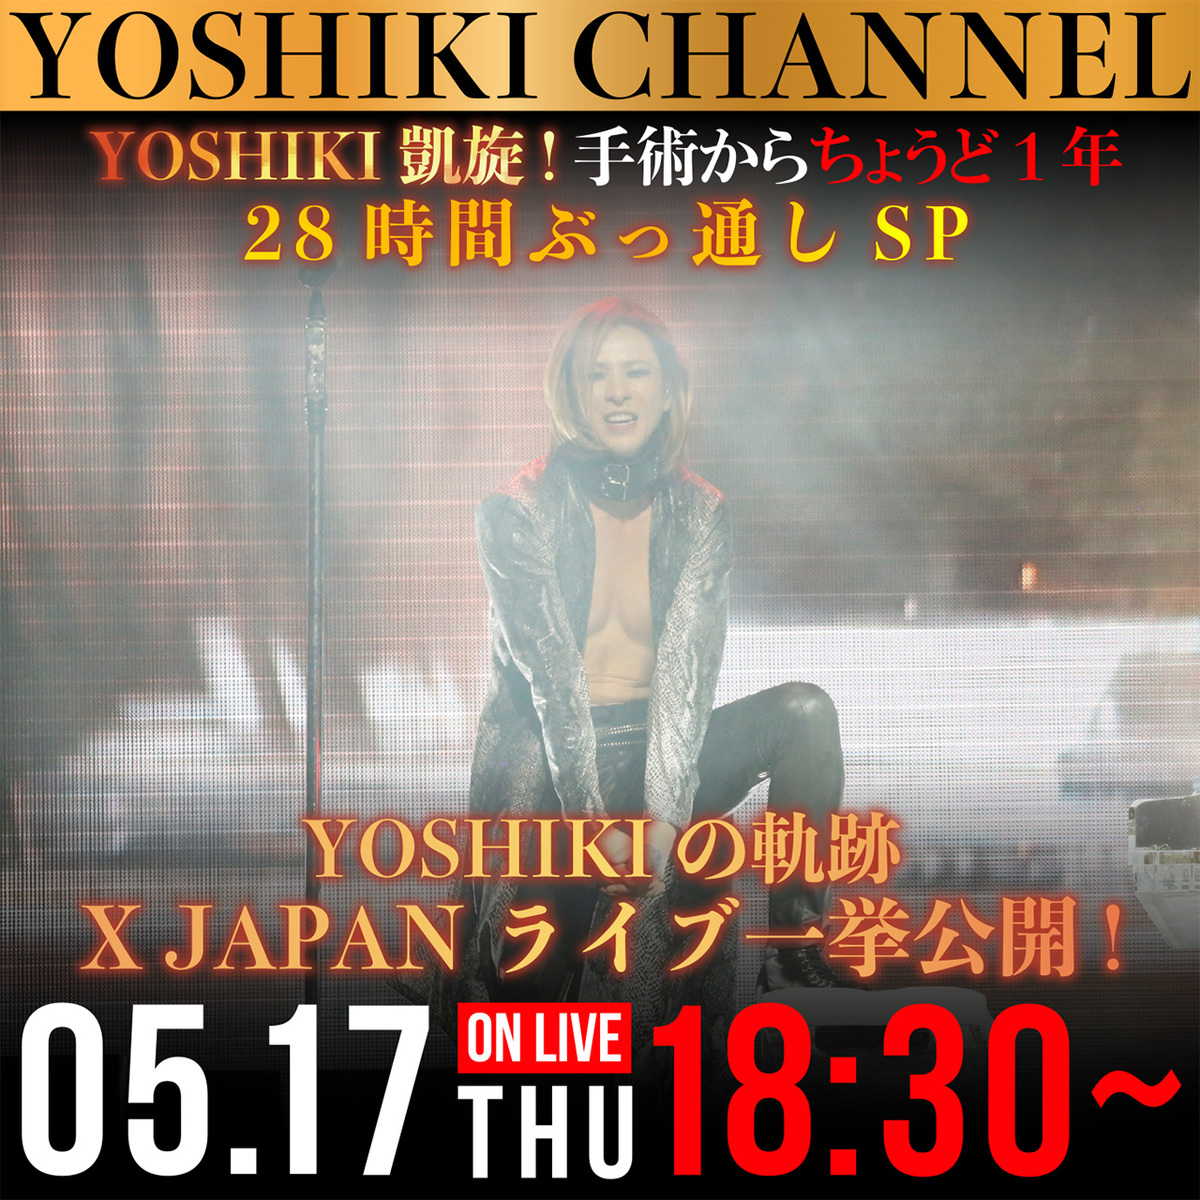 Yoshiki X Japan 本日5 17 18 30から特番 手術からちょうど1年 28時間ぶっ通しスペシャル 放送決定 激ロック ニュース